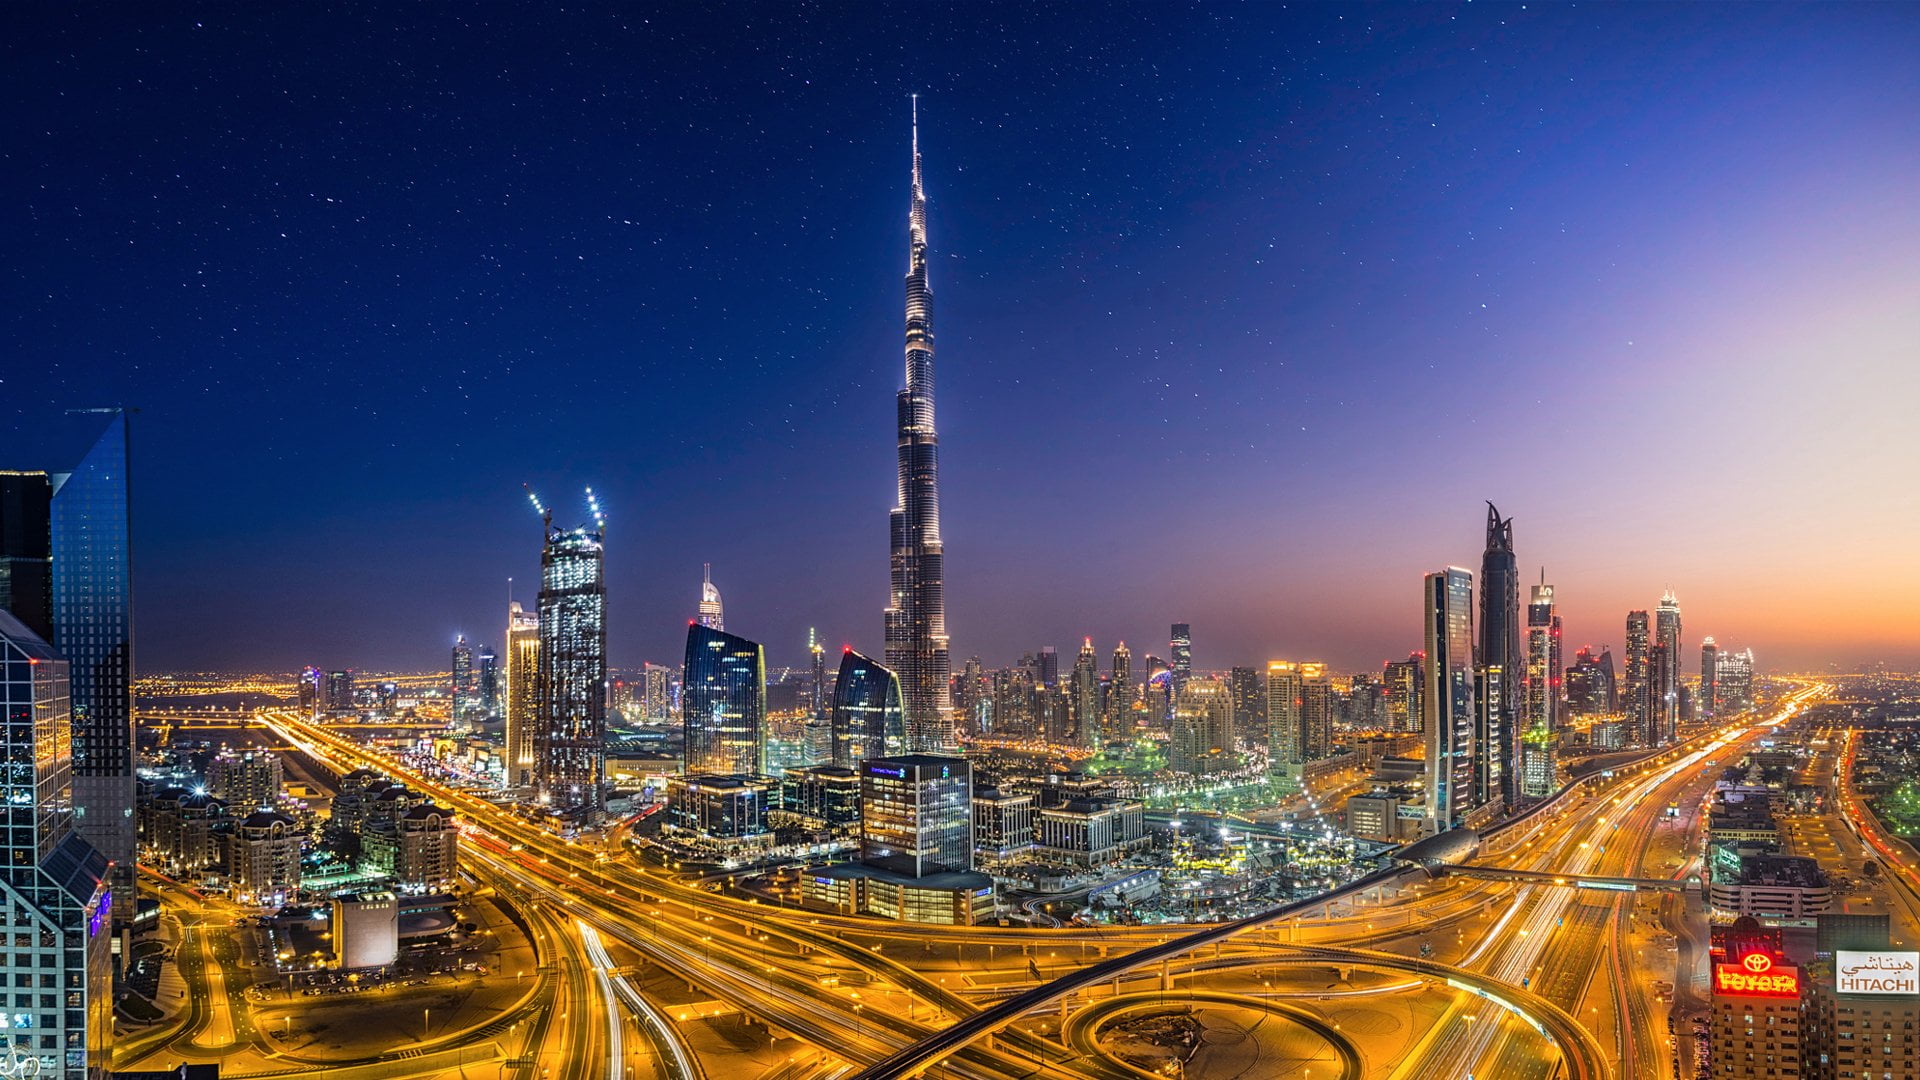 aerial view of city during night, Cities, Dubai, Burj Khalifa